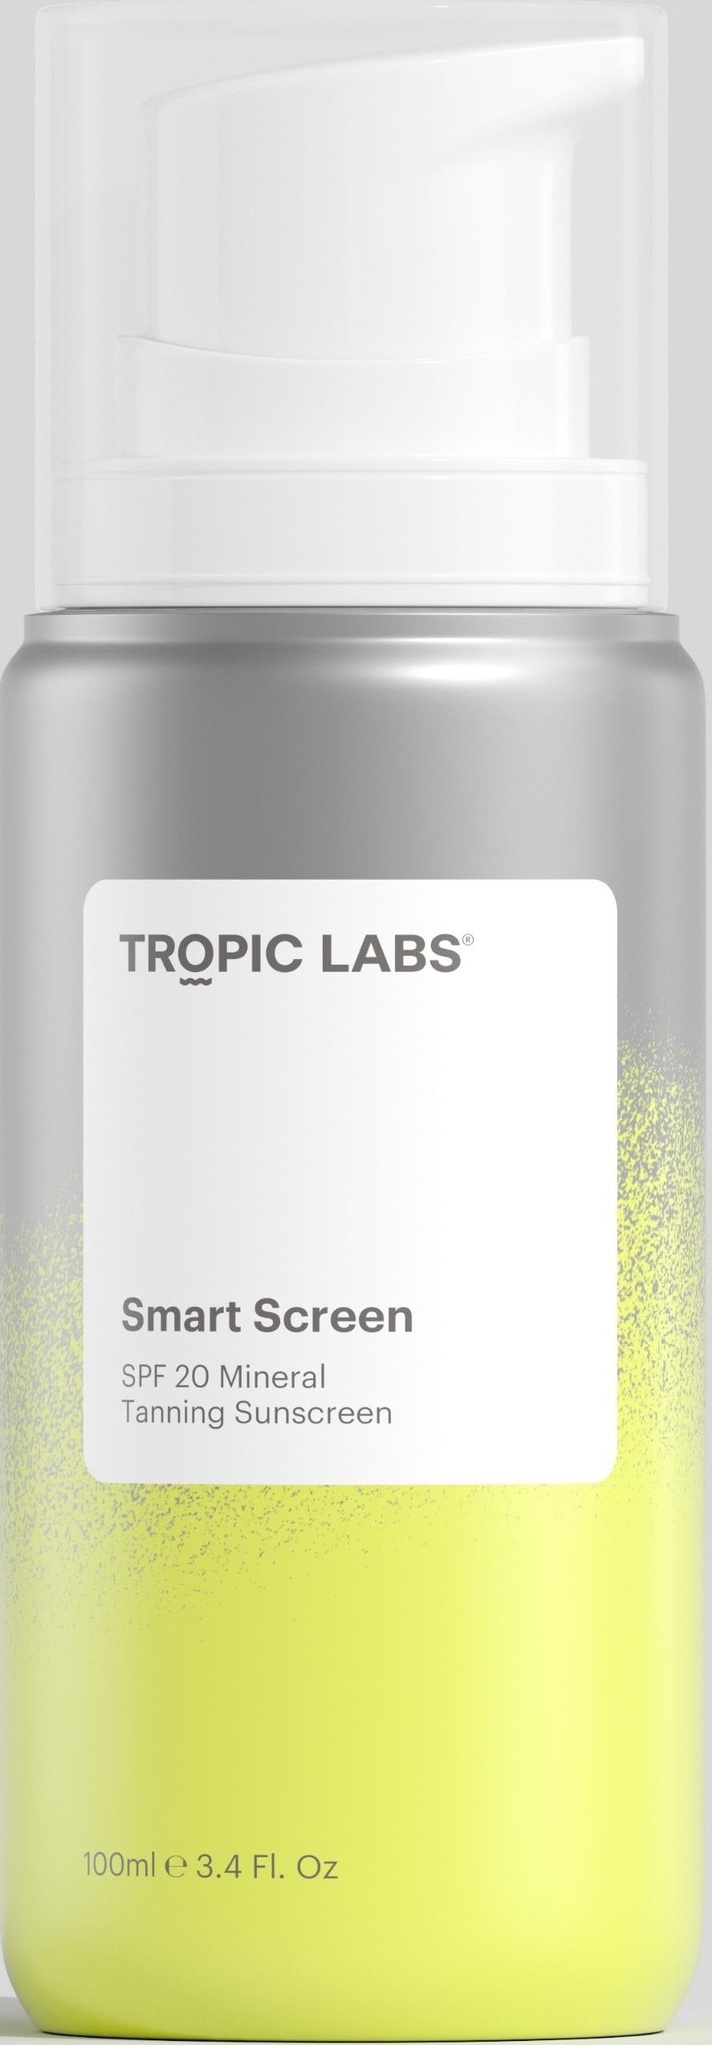 Tropic Labs Smart Screen